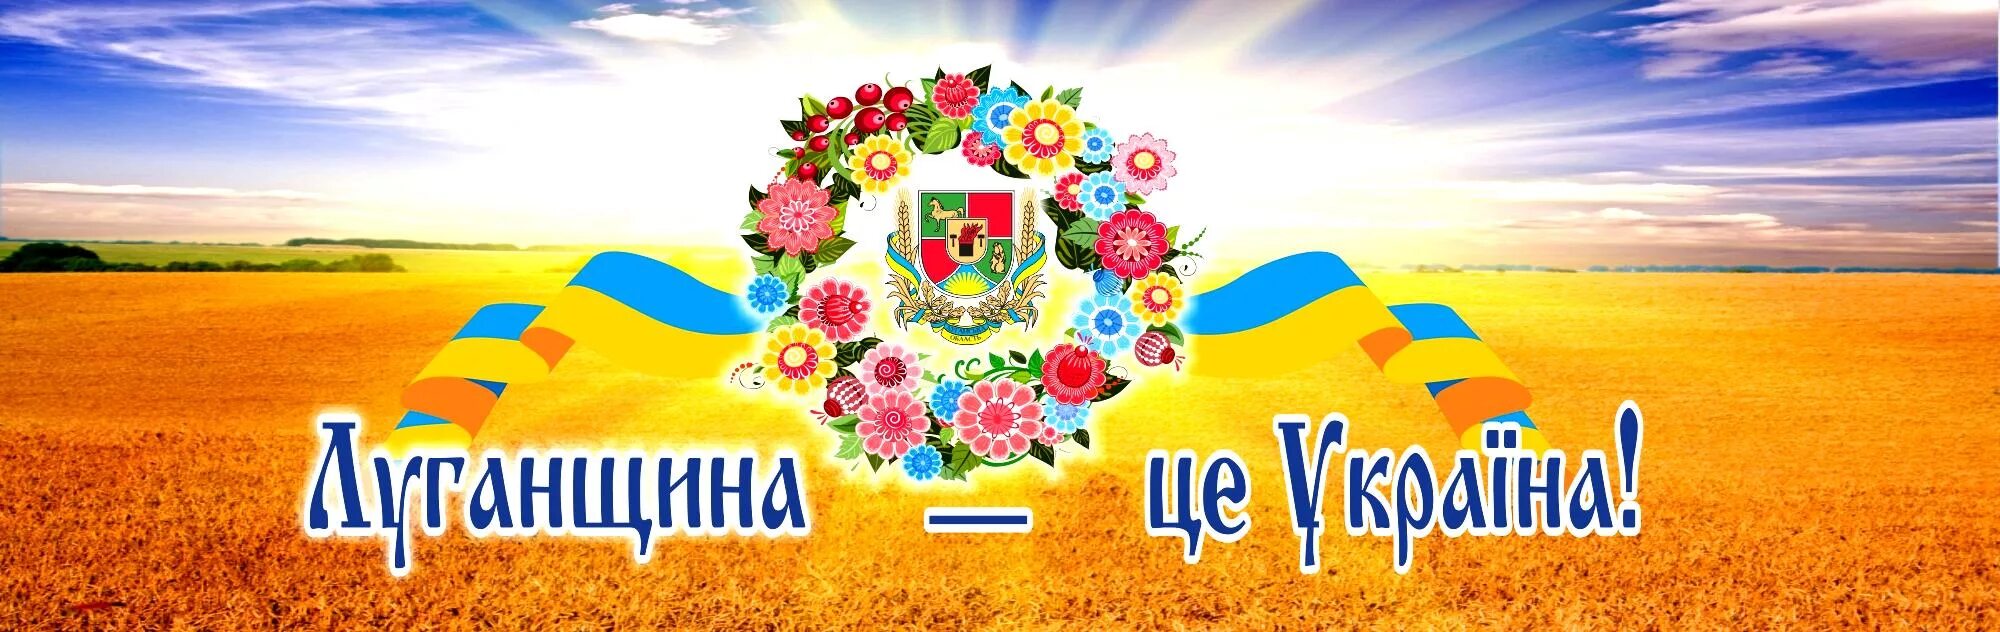 Луганщина. Луганск це Украина. Україна це ми. Картинки о Луганщине.